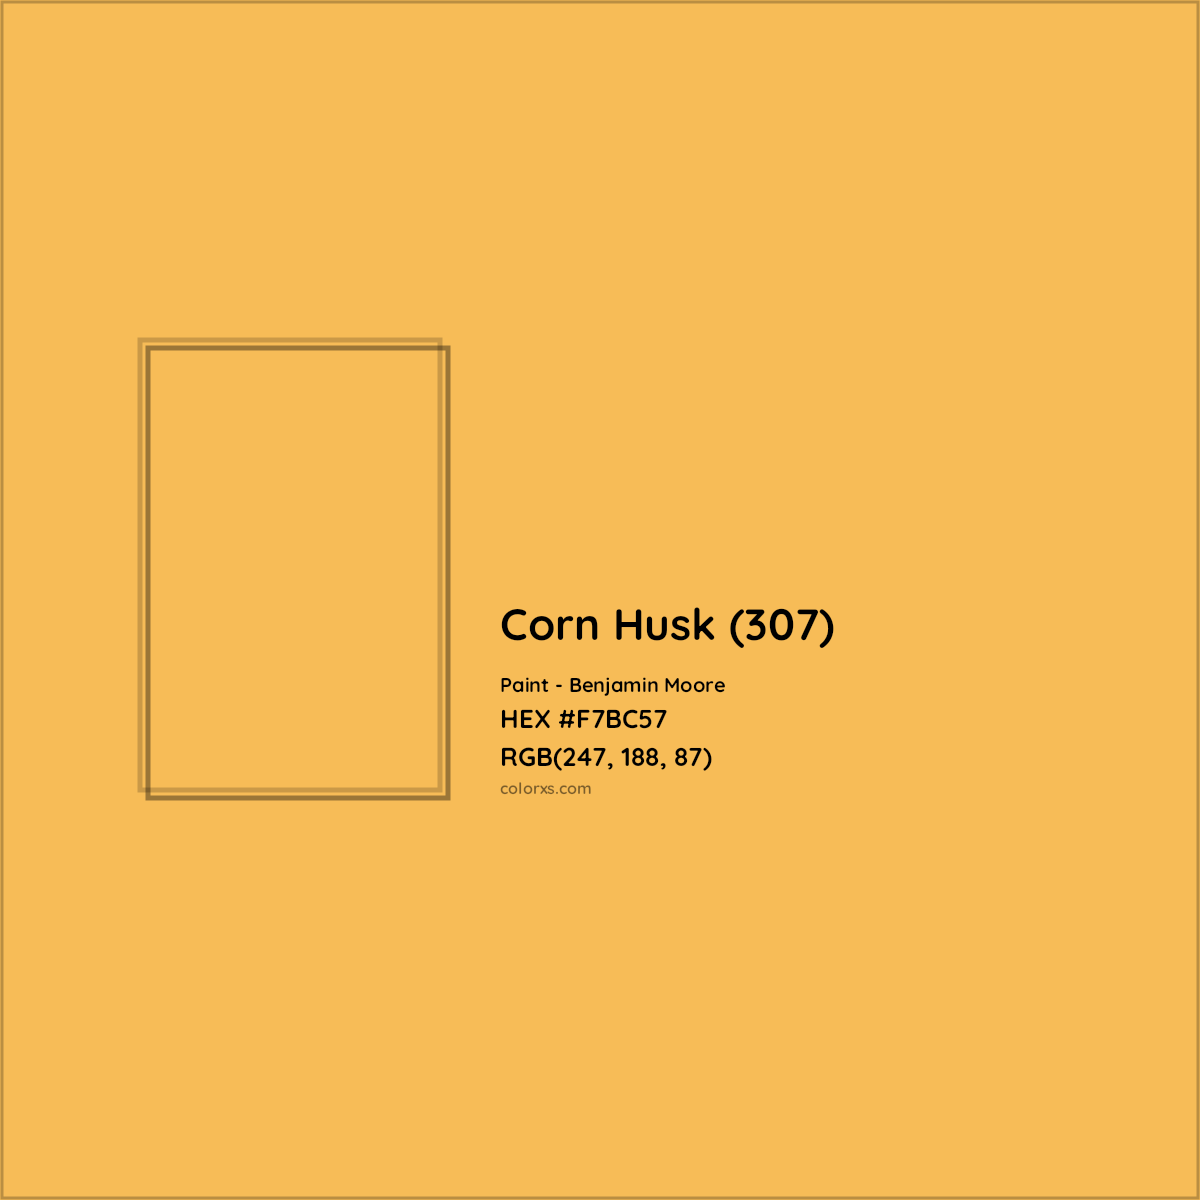 HEX #F7BC57 Corn Husk (307) Paint Benjamin Moore - Color Code